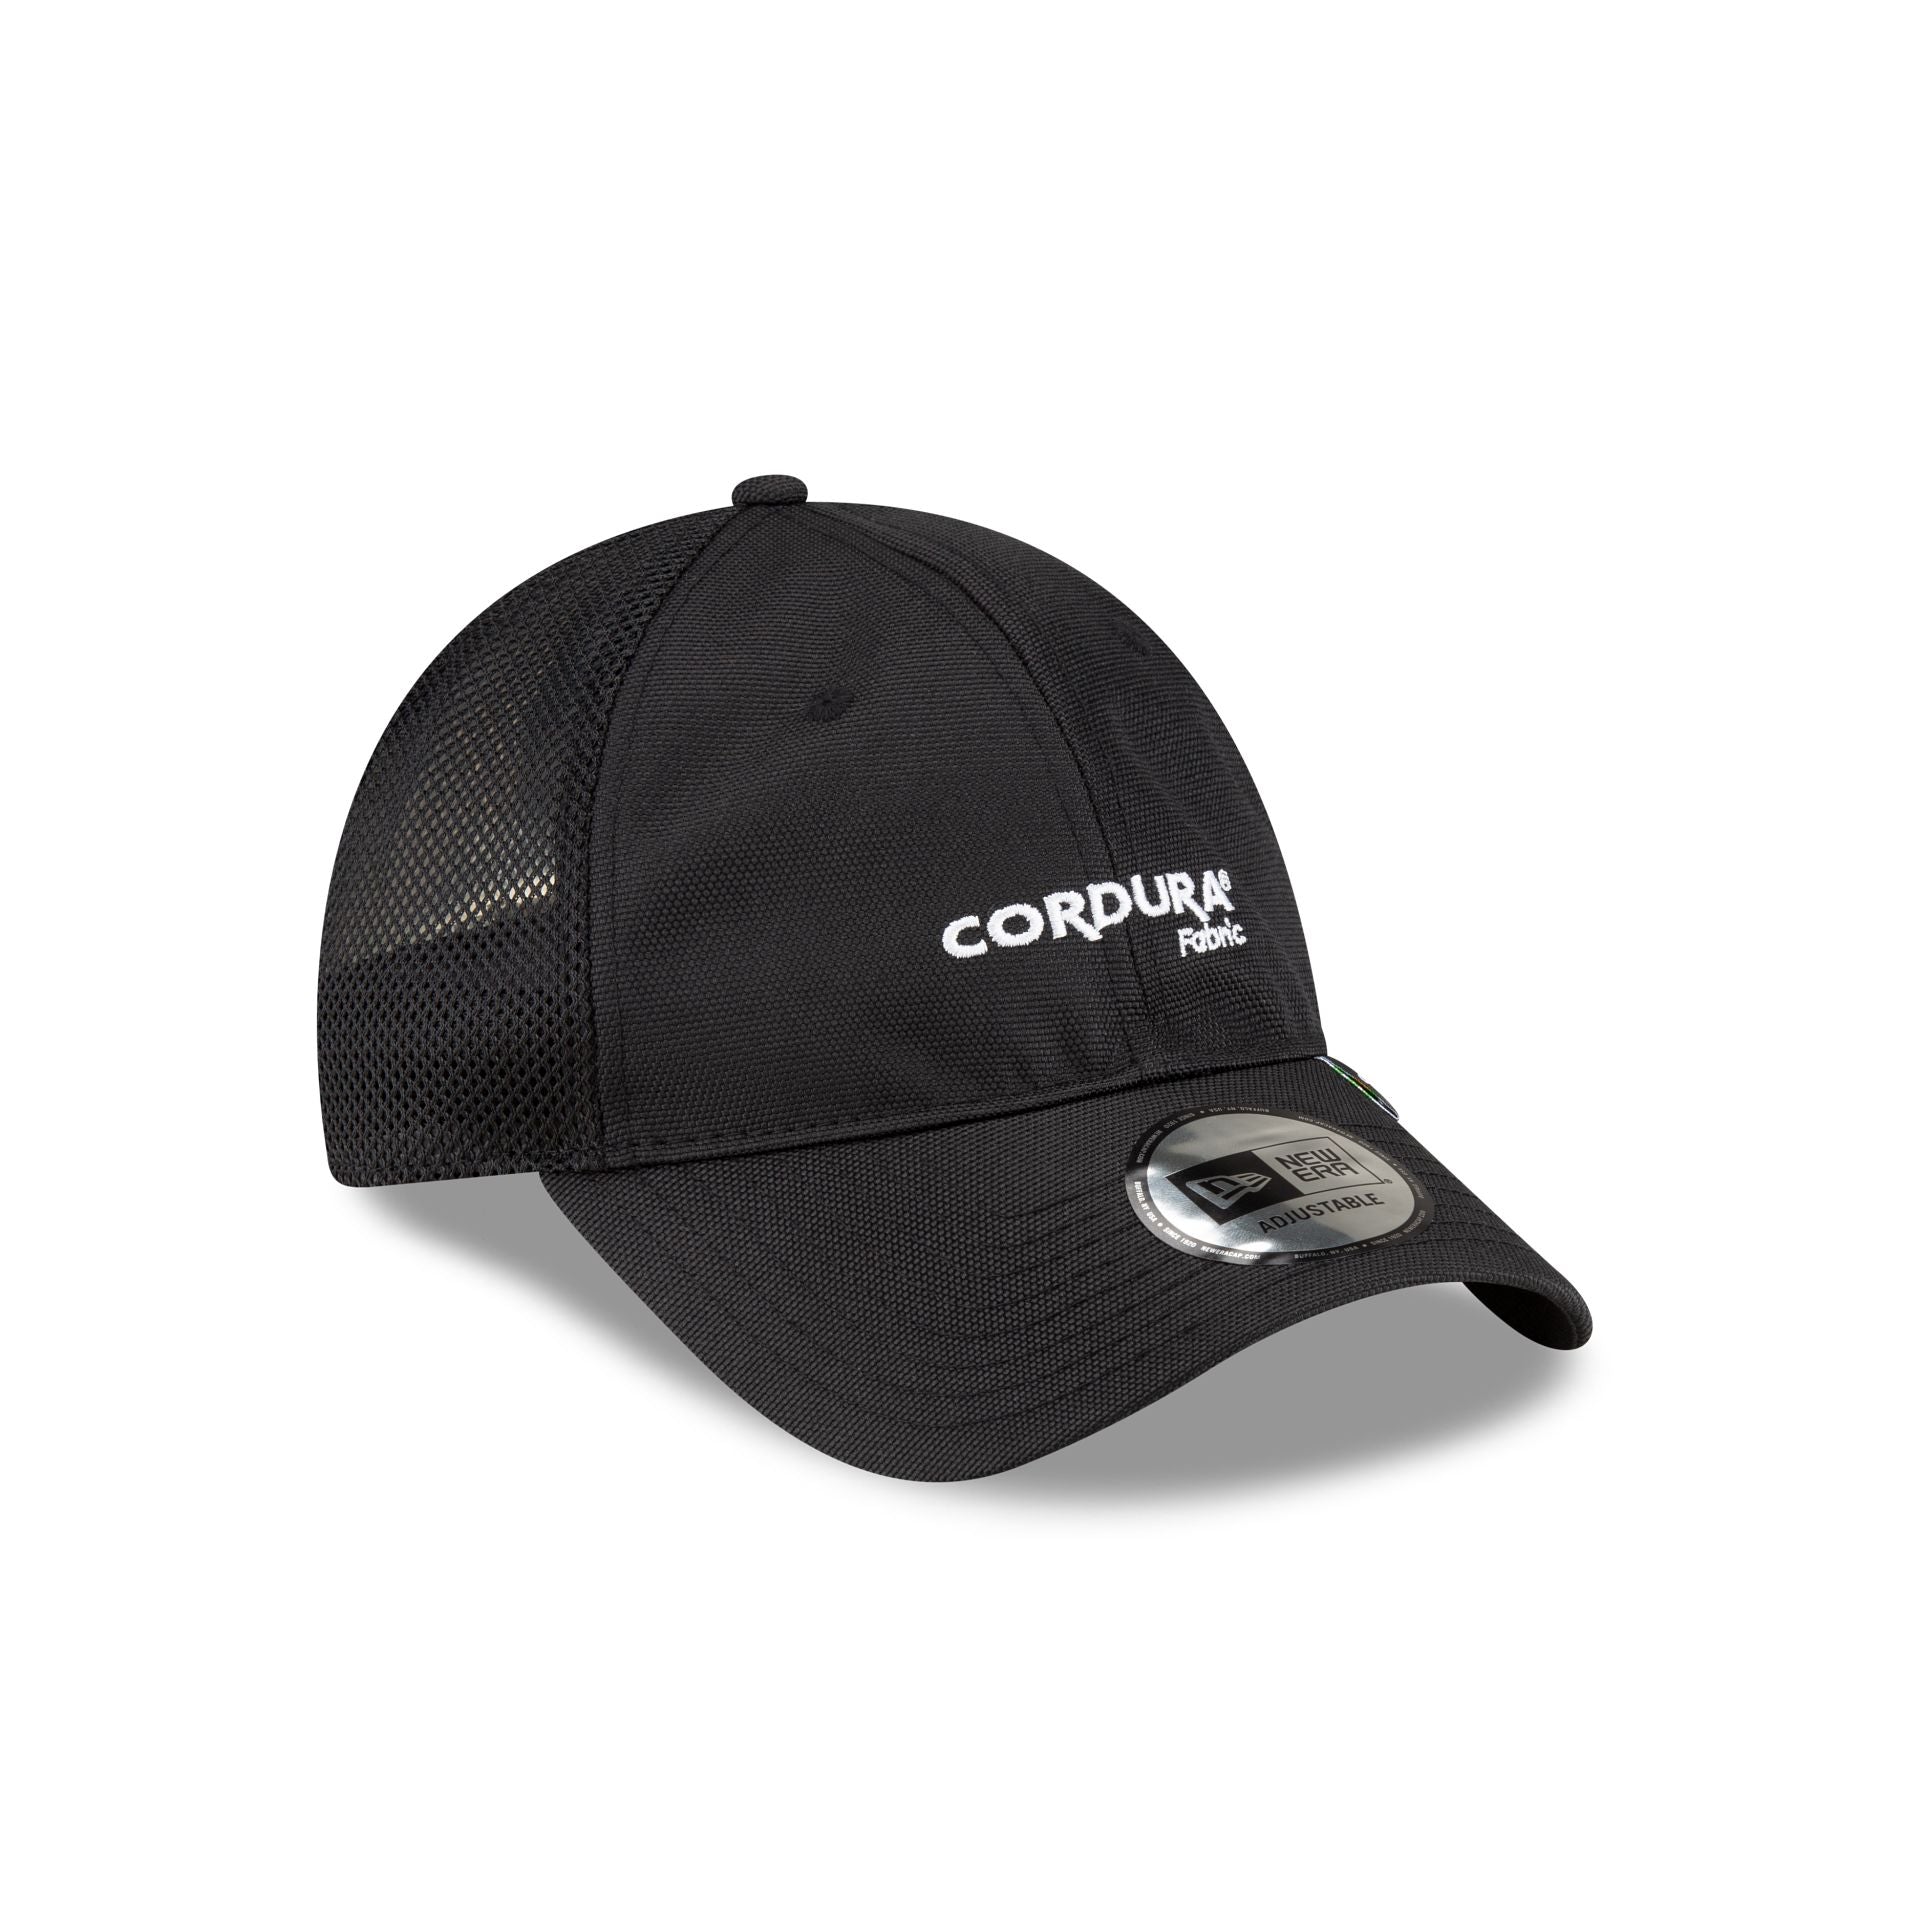 New Era Cap Cordura Re Cor Black 9FORTY Unstructured Adjustable